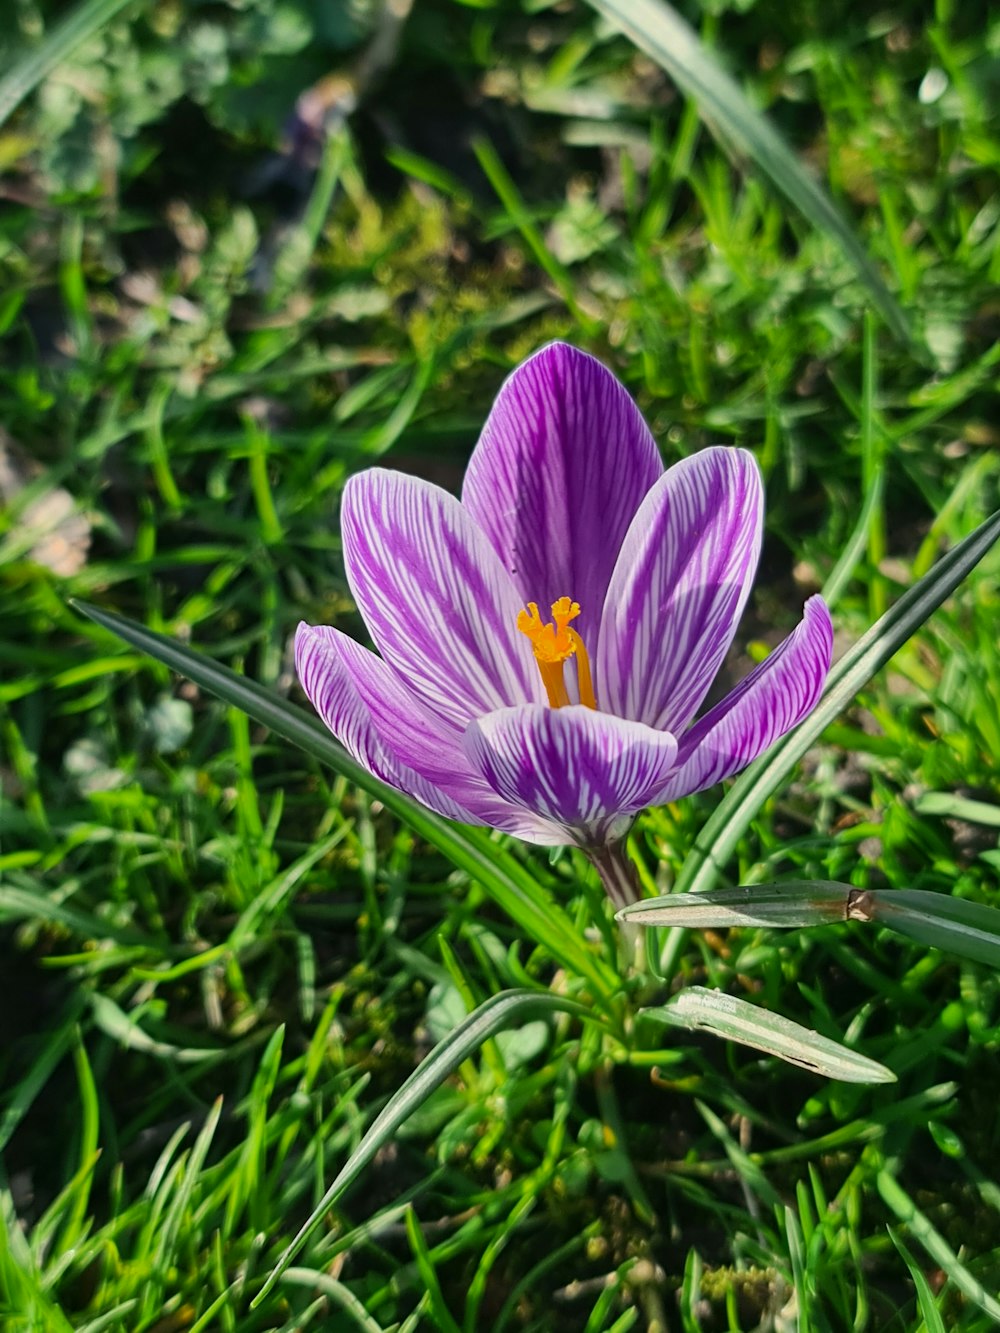 a single purple flower sitting on top of a lush green field